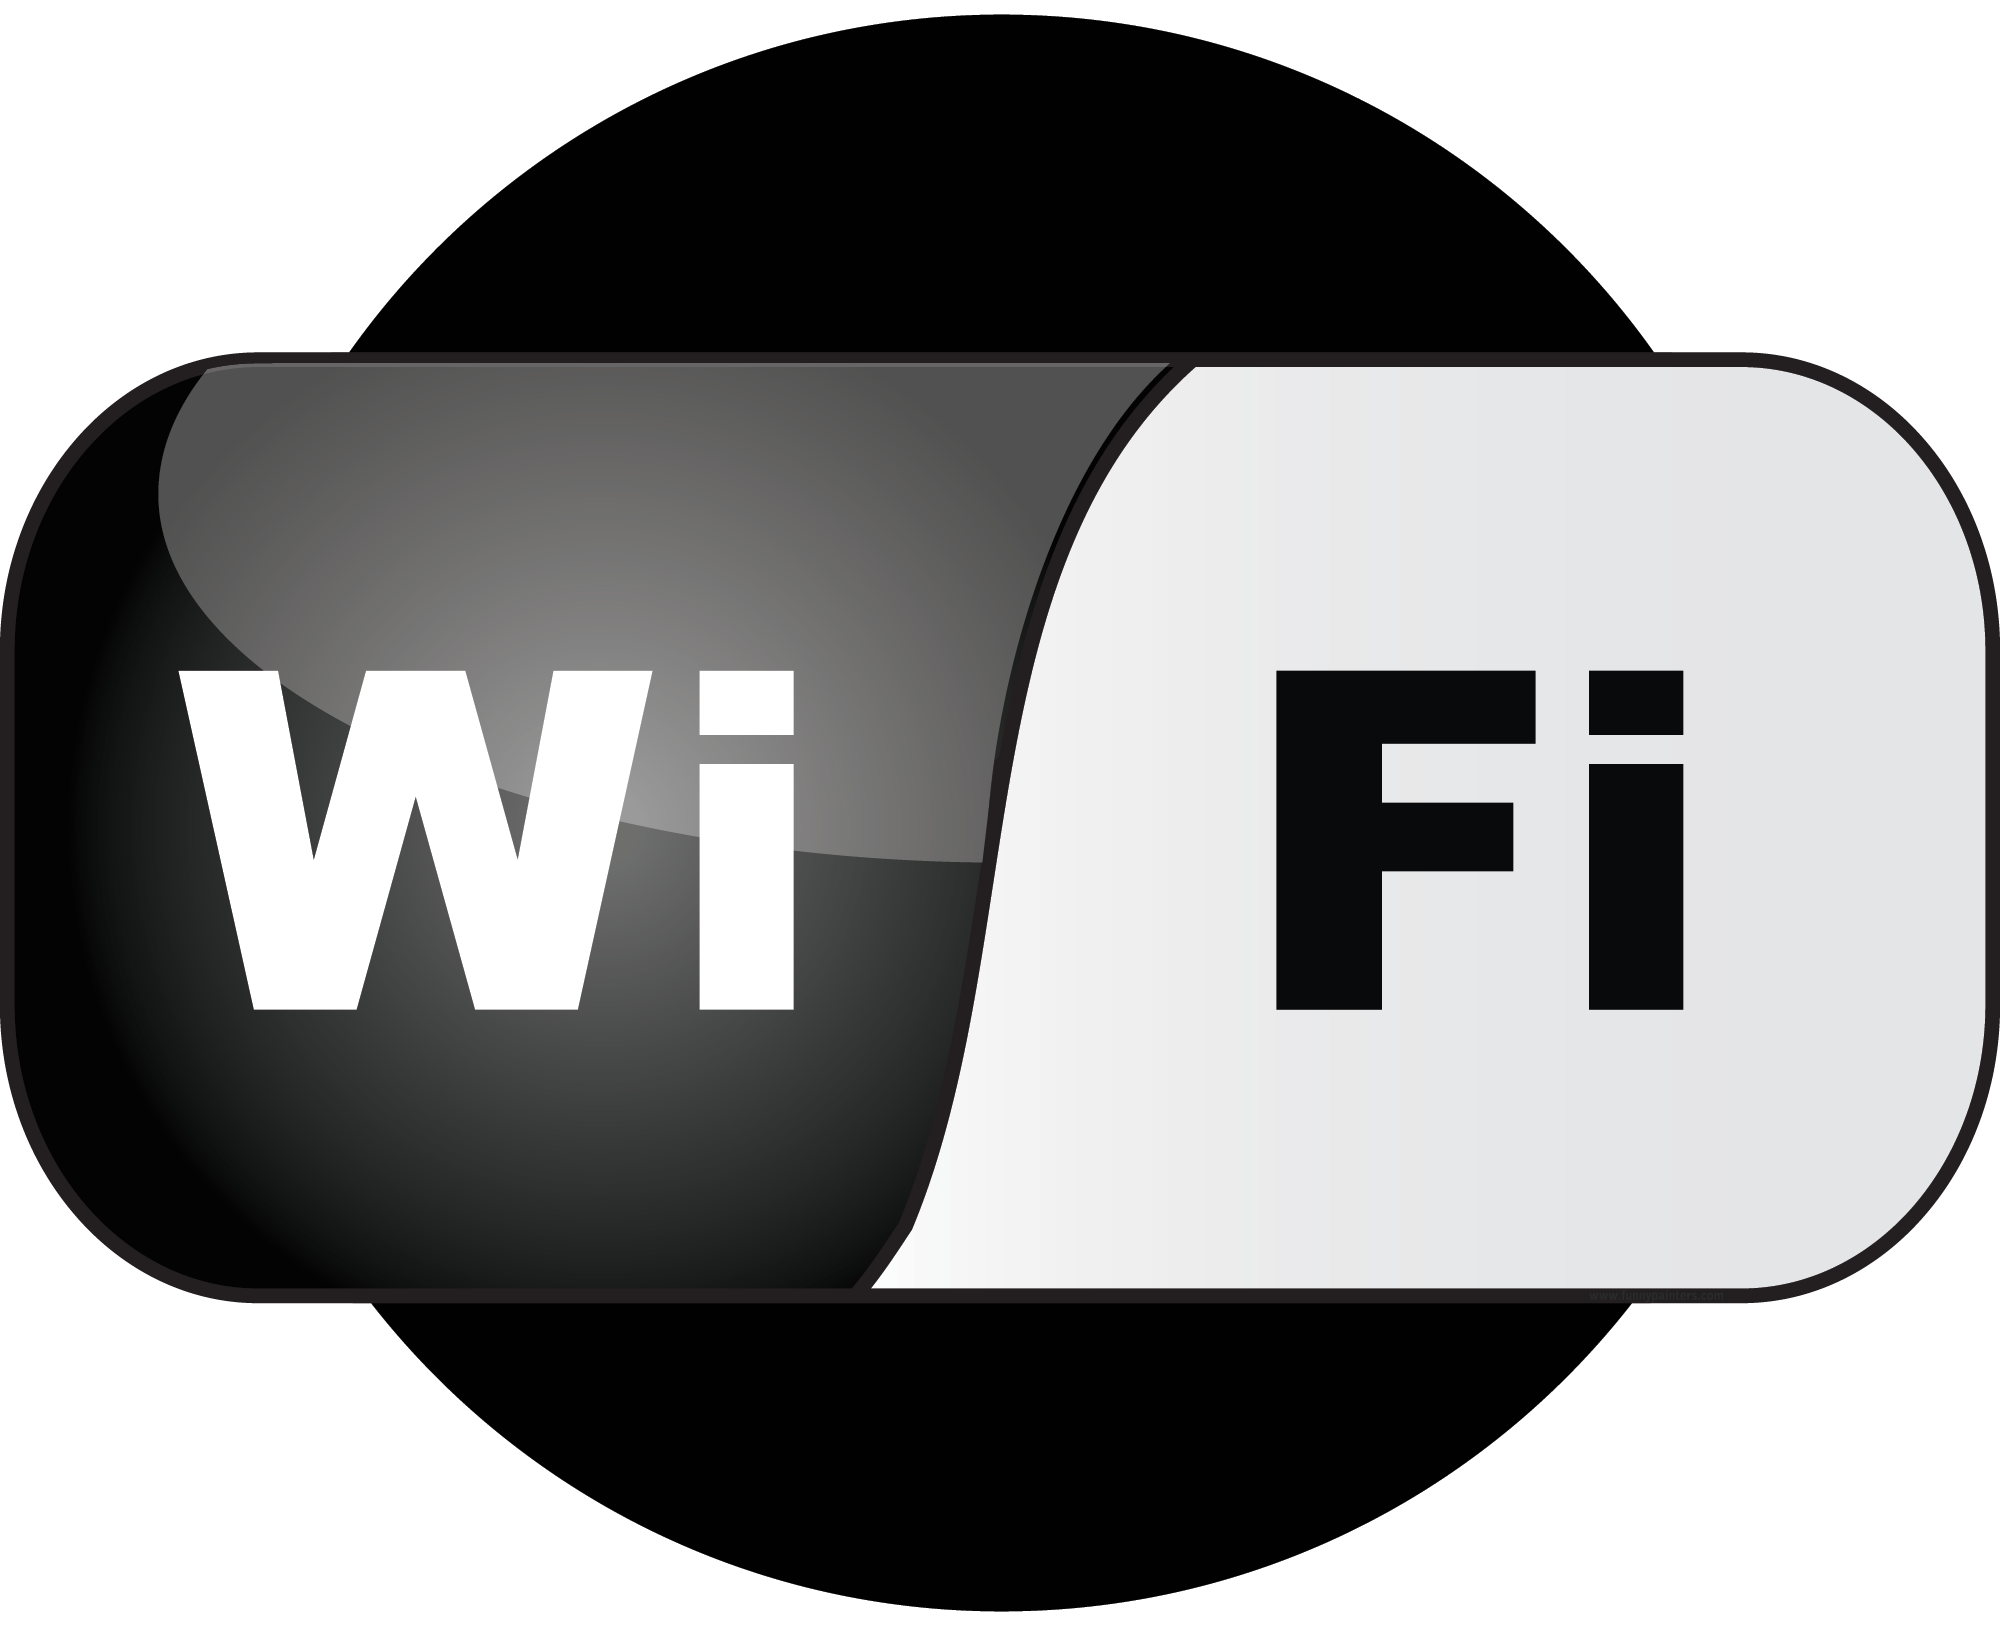 Wi-Fi publik